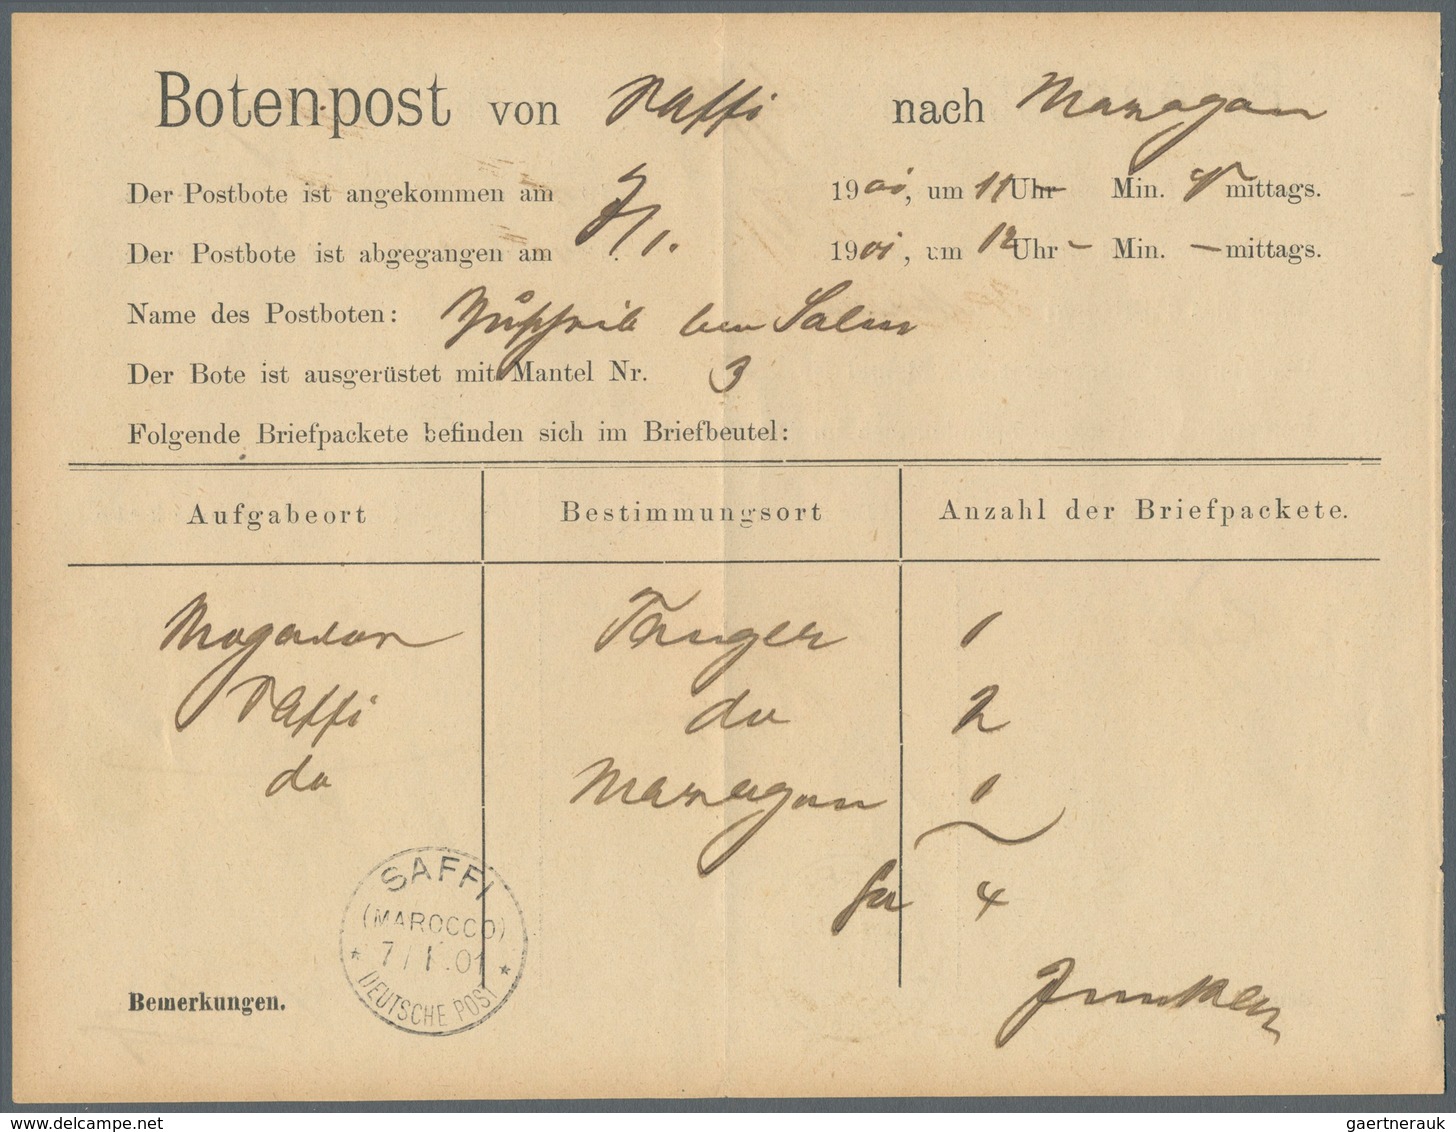 18495 Deutsche Post In Marokko - Besonderheiten: 1901 (5.1.), Stempel "SAFFI (MAROKKO) DEUTSCHE POST" Auf - Deutsche Post In Marokko